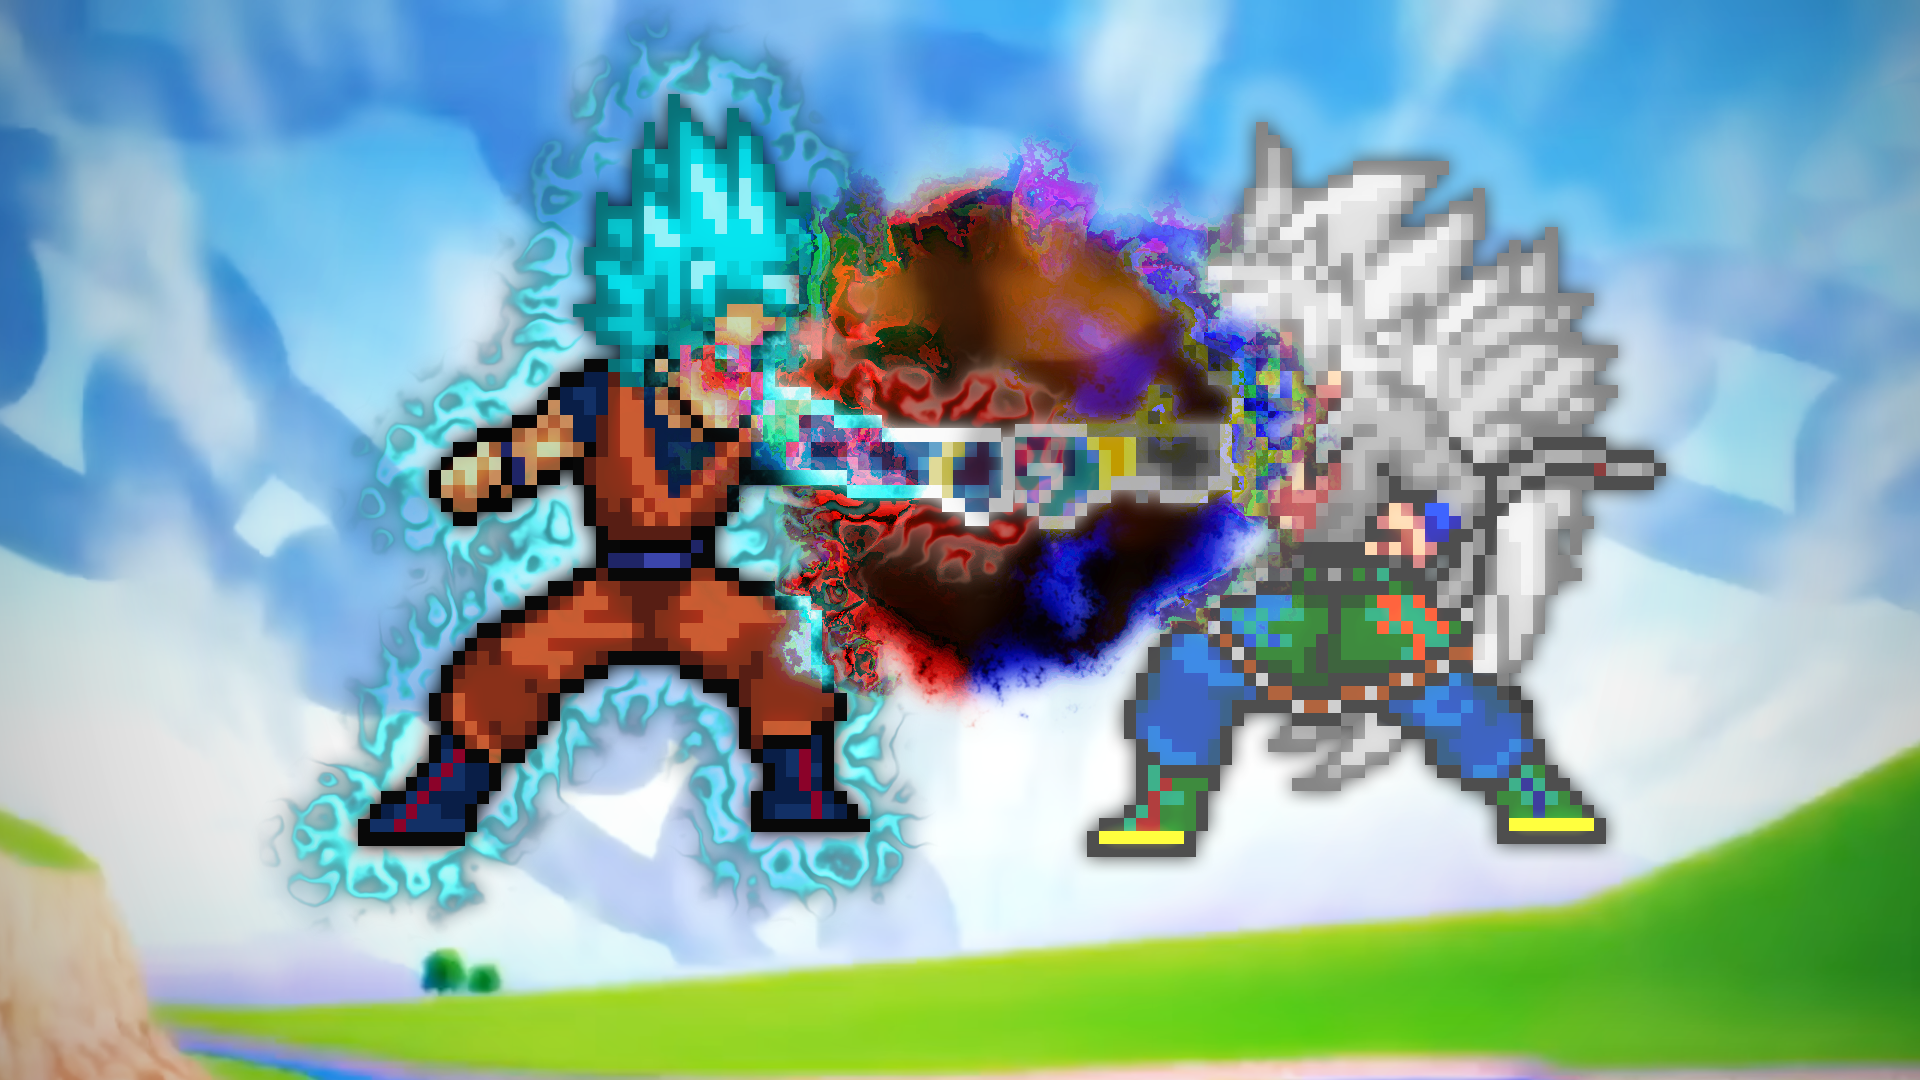 Goku ssj blue vs Goku ssj5 by LuisilloLoquenderoII on DeviantArt